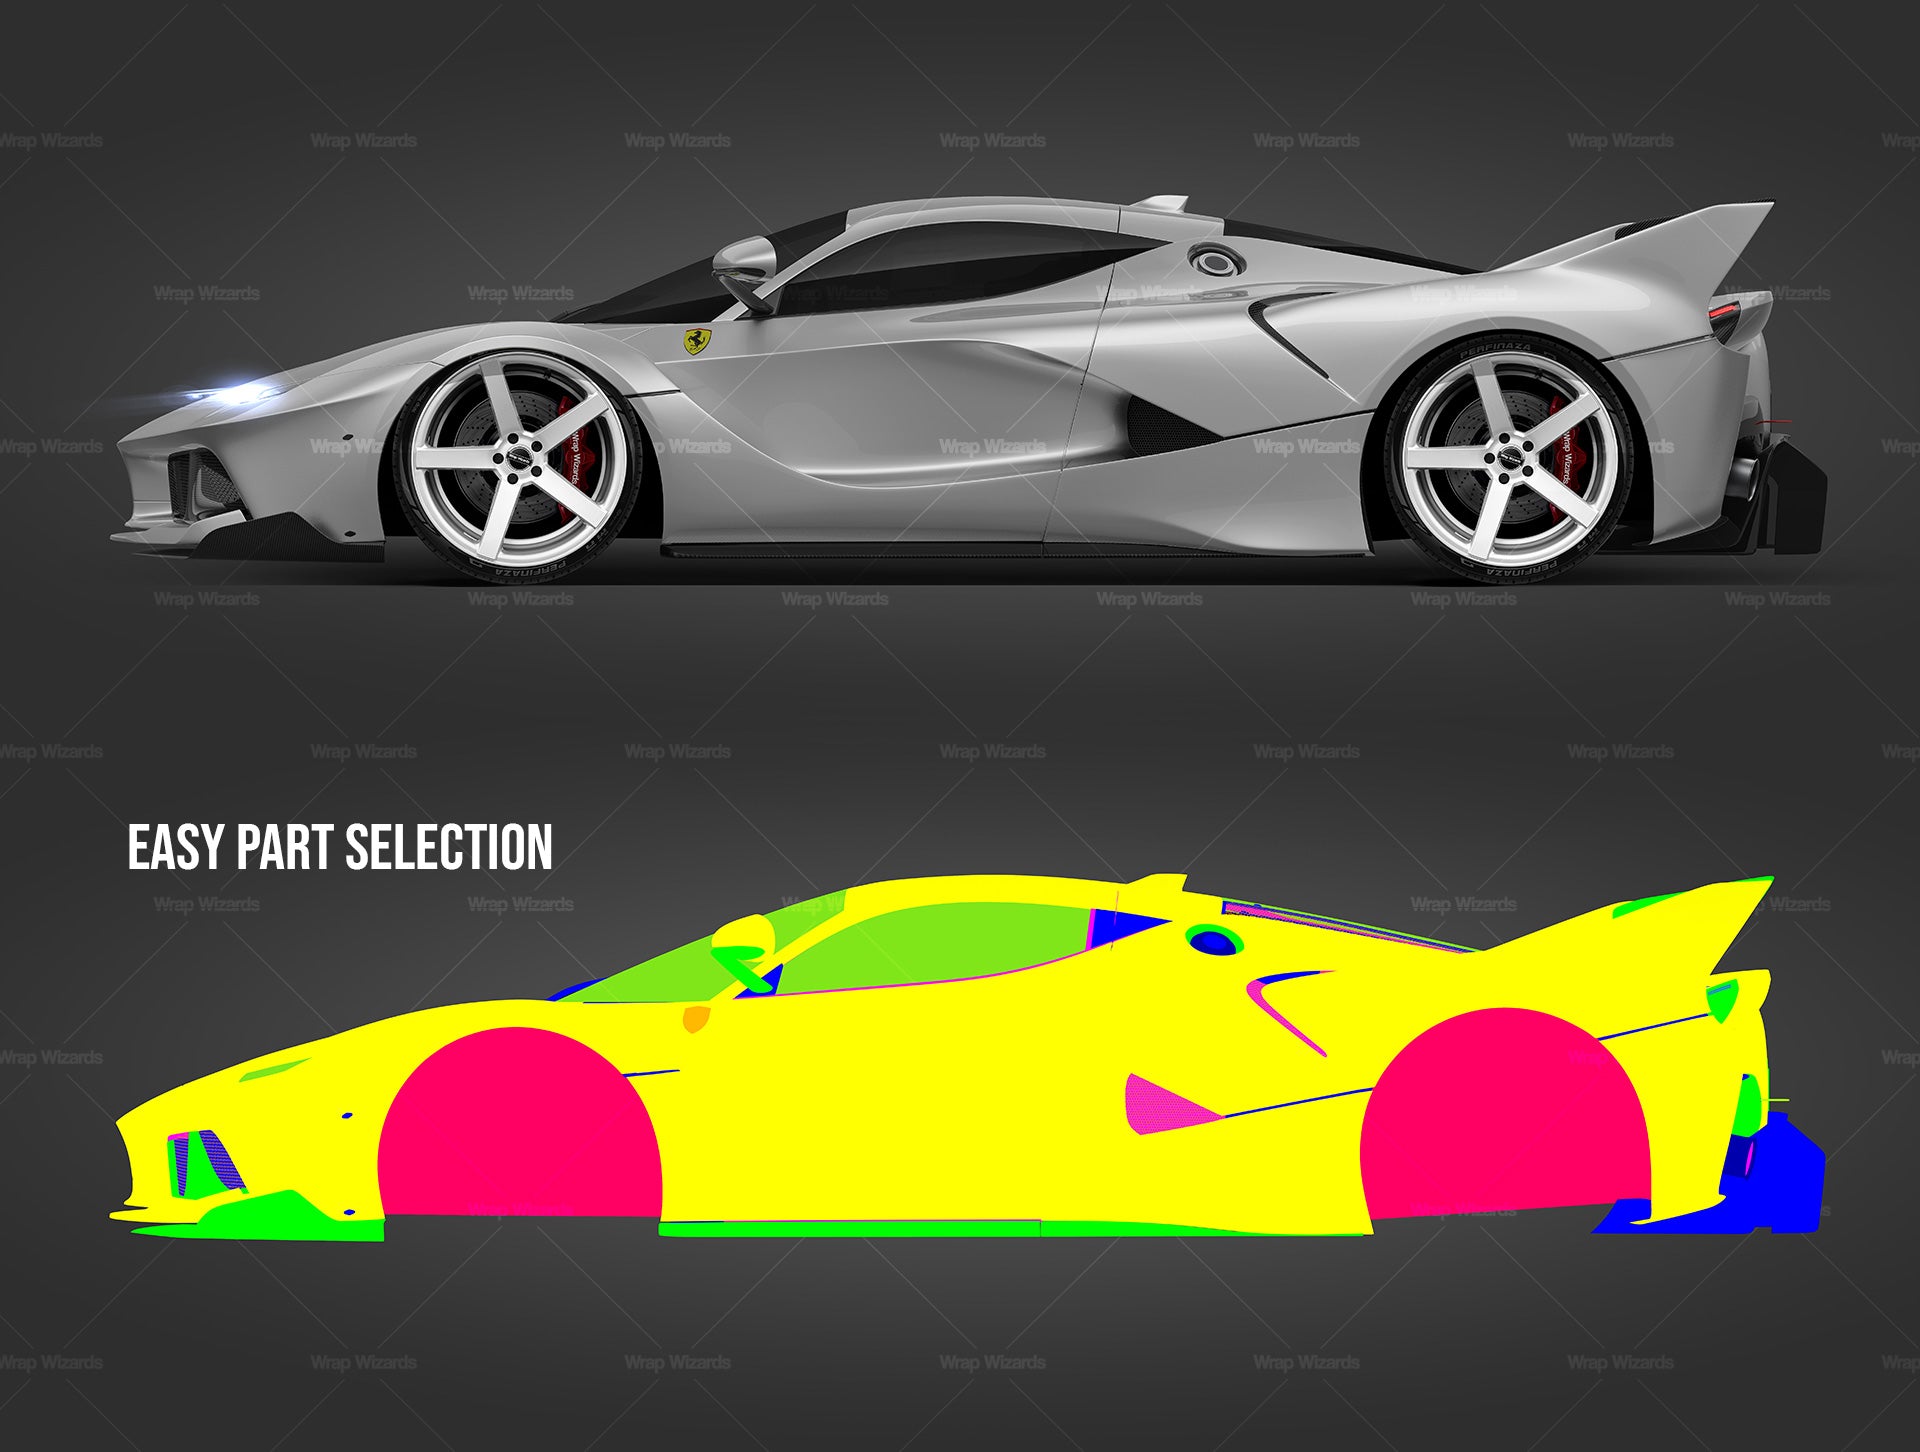 Ferrari FXX K glossy finish - all sides Car Mockup Template.psd